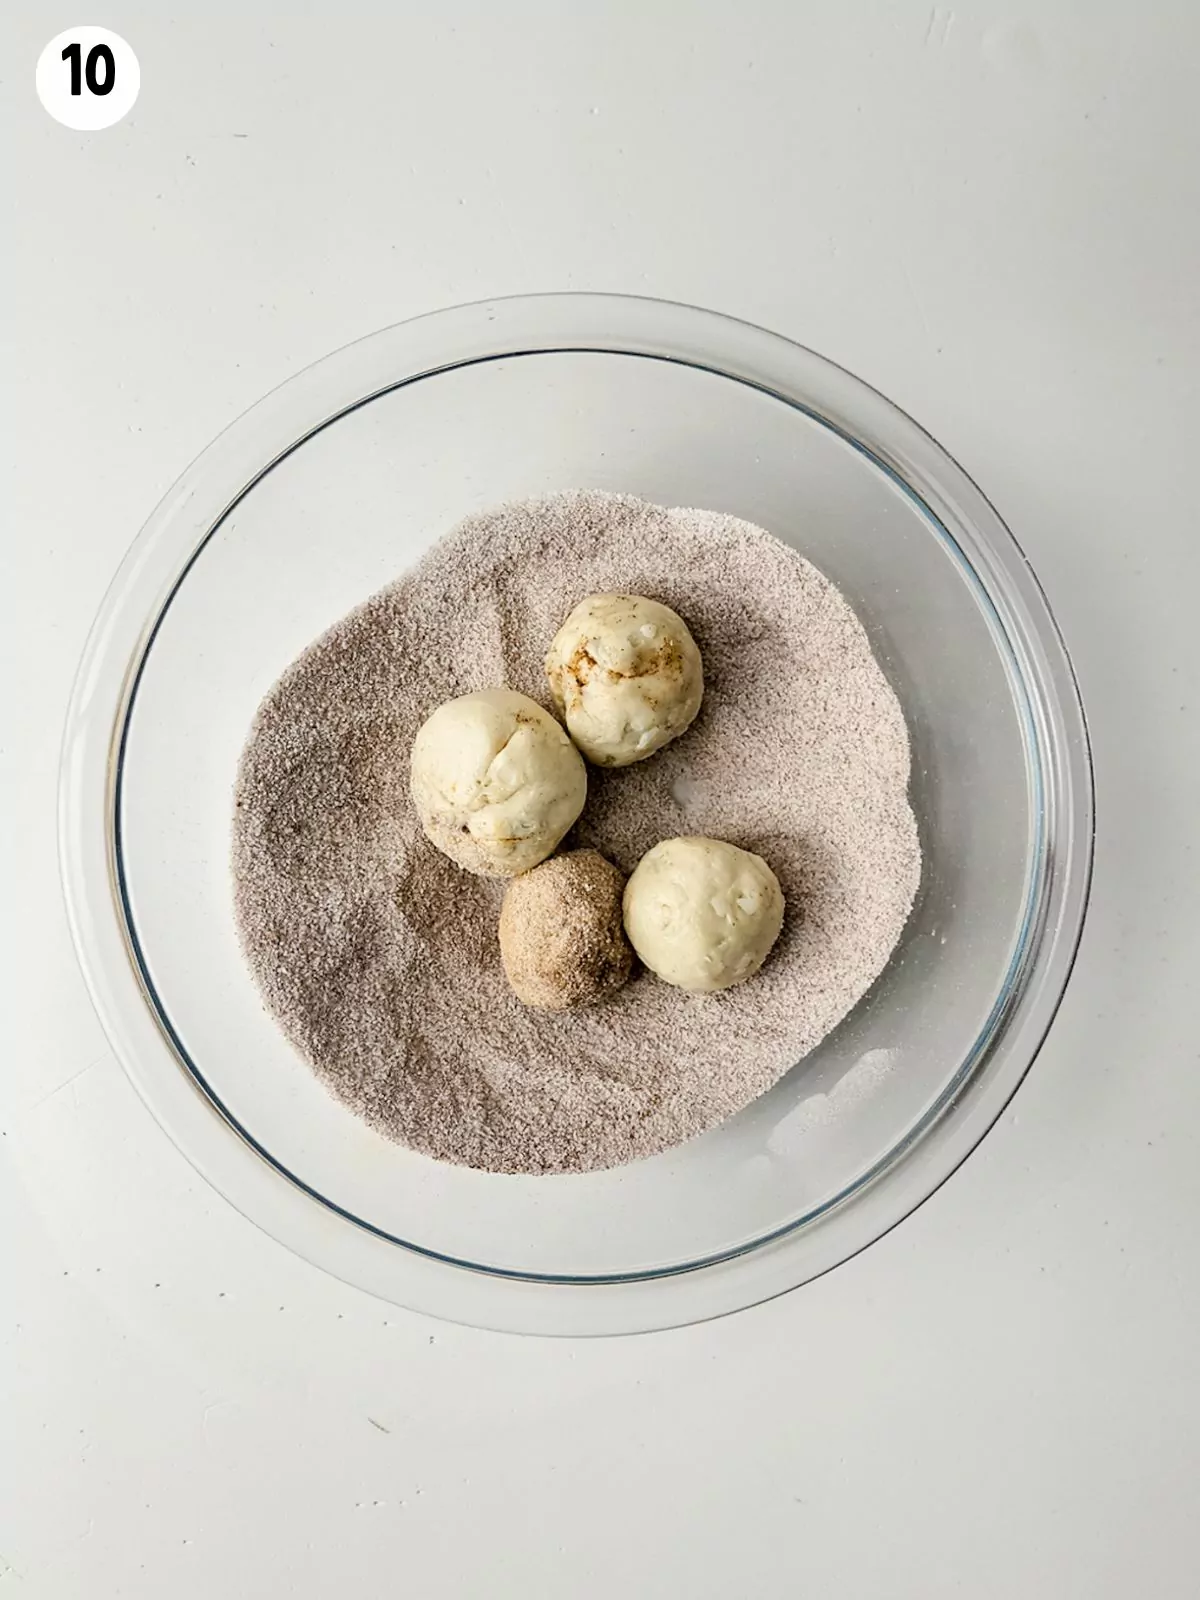 refrigerator biscuit dough rolled into balls in cinnamon sugar mixture.